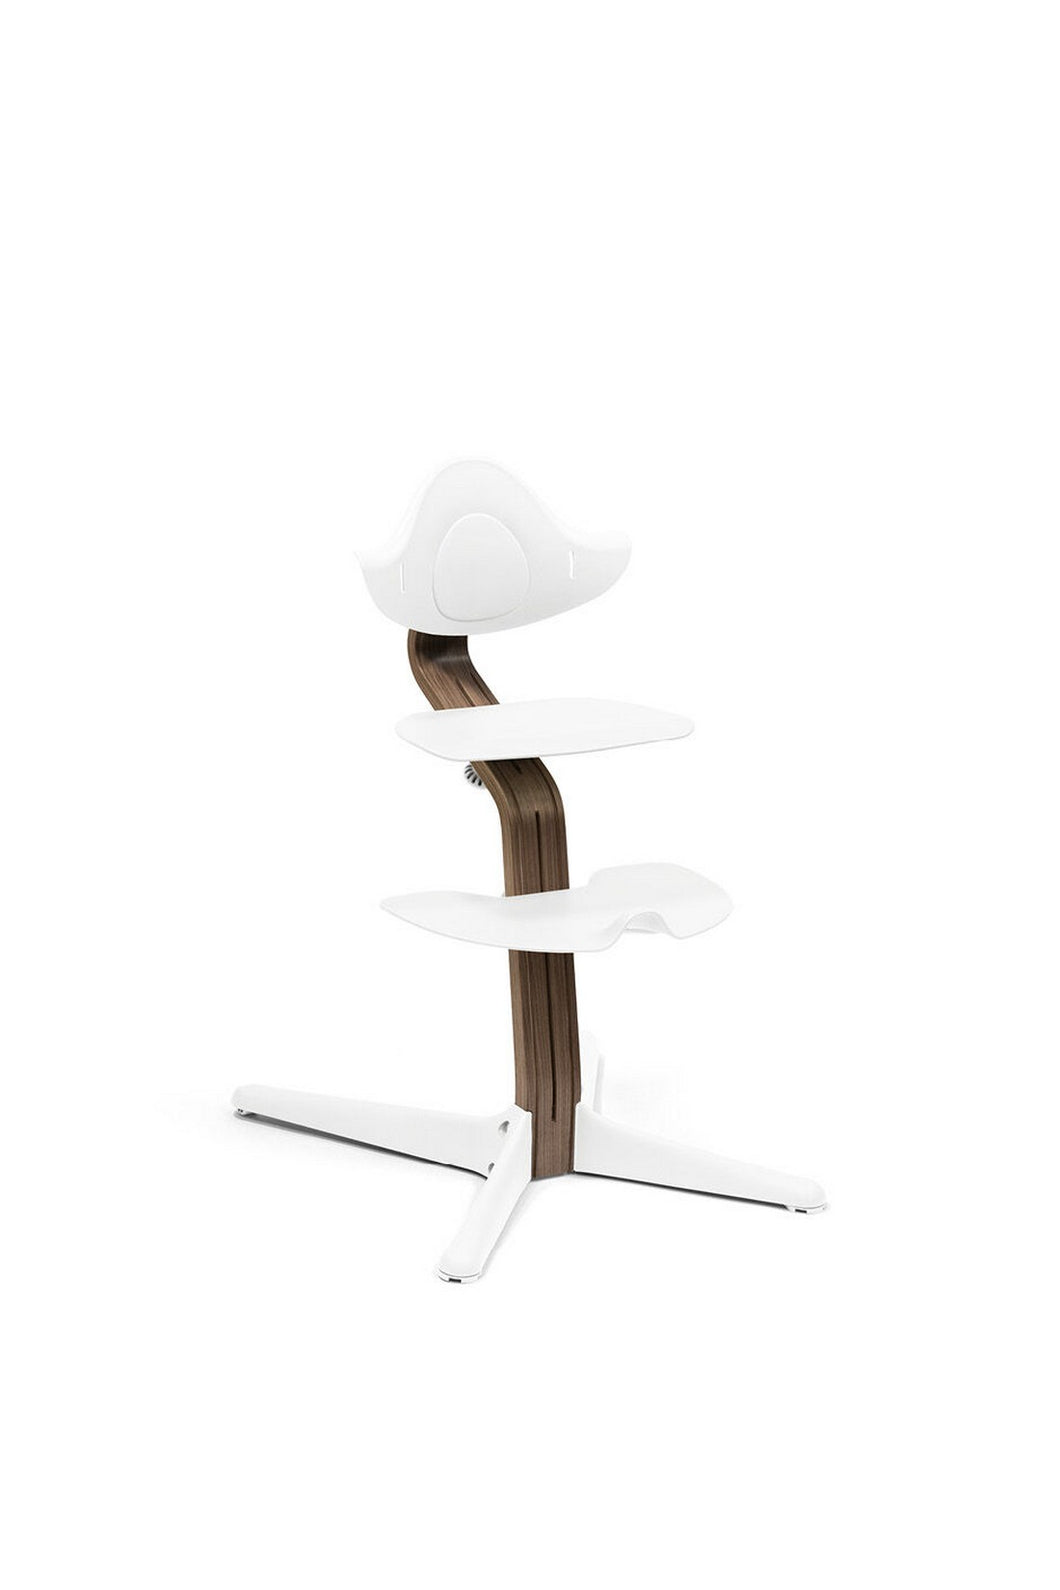 Stokke Nomi Chair - Walnut White 1